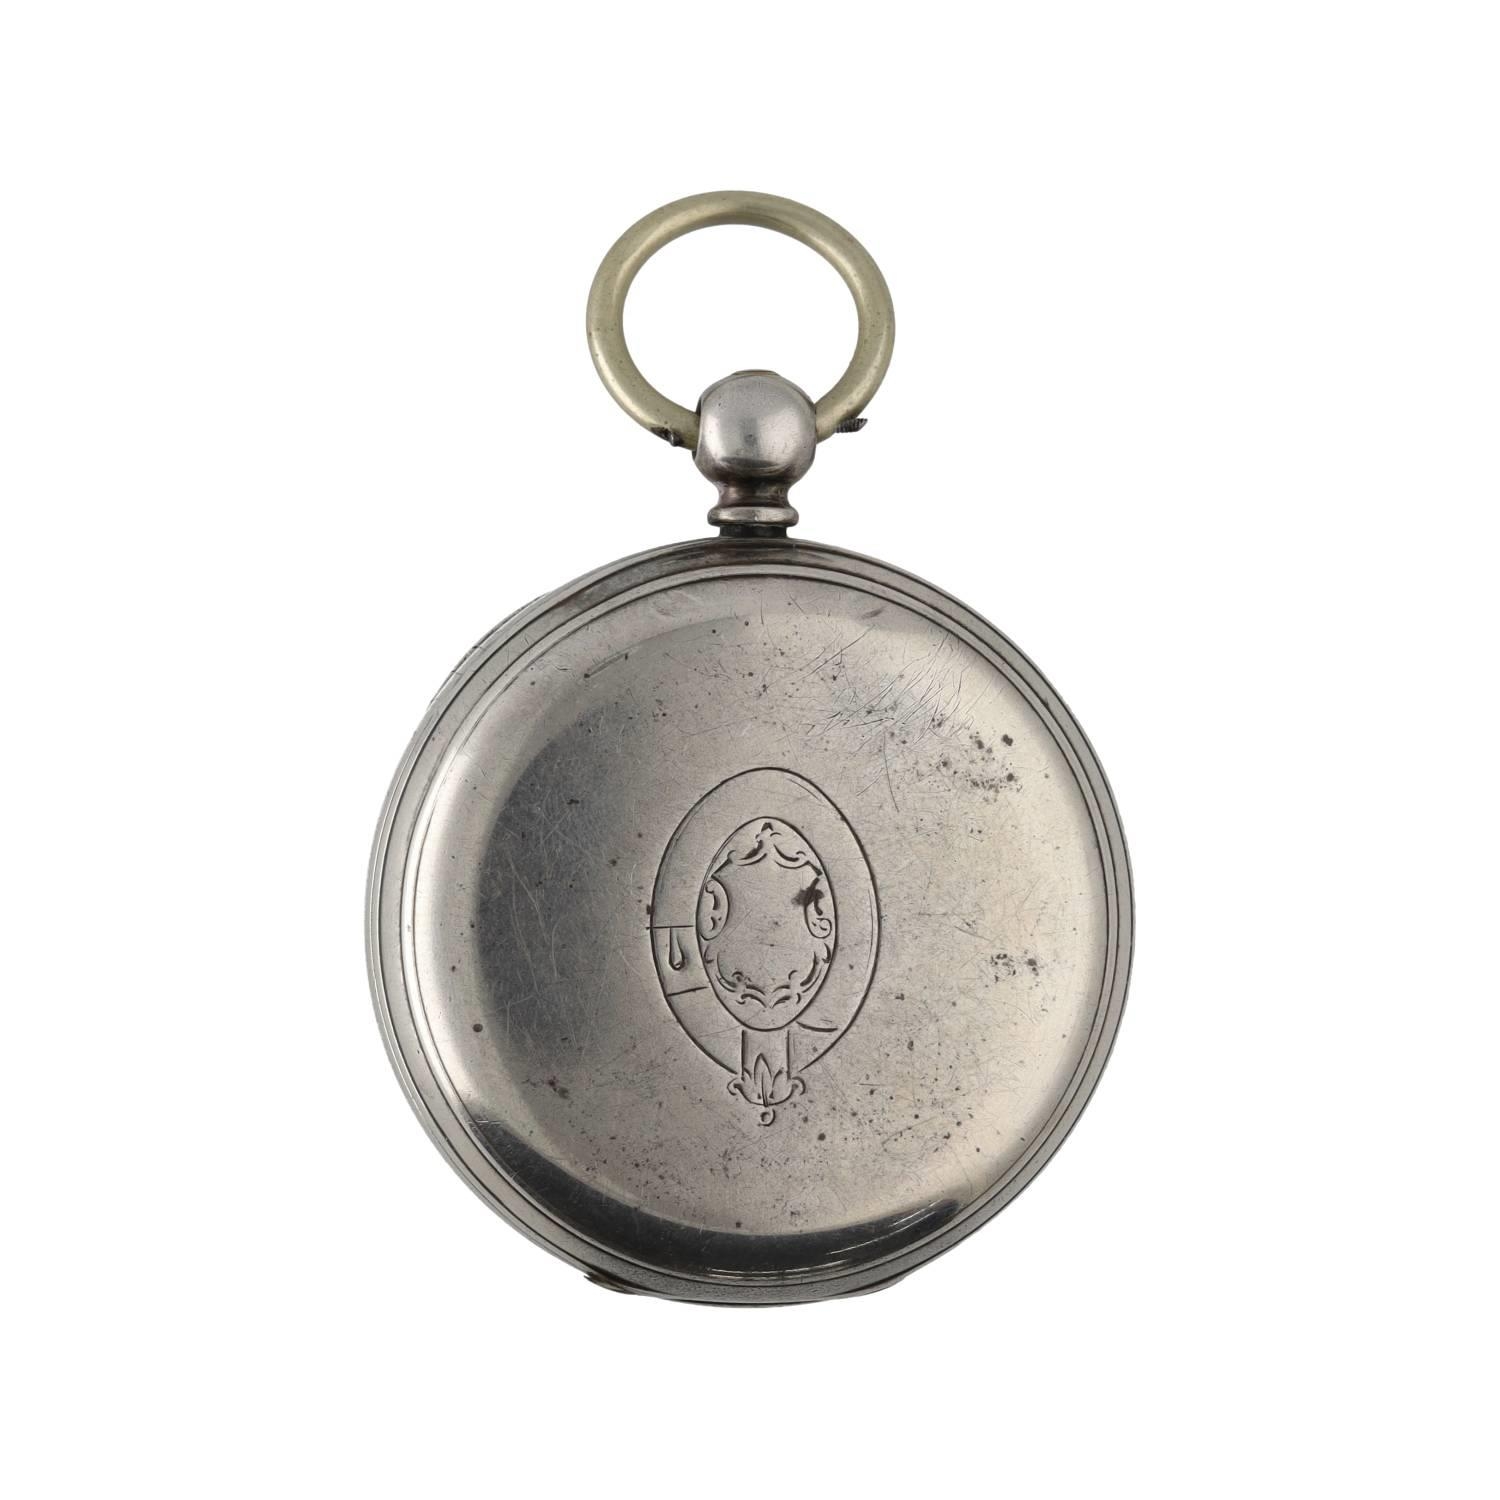 American Waltham 'Martyn Sq.' silver lever pocket watch, circa 1884, serial no. 2599052, signed - Image 3 of 3